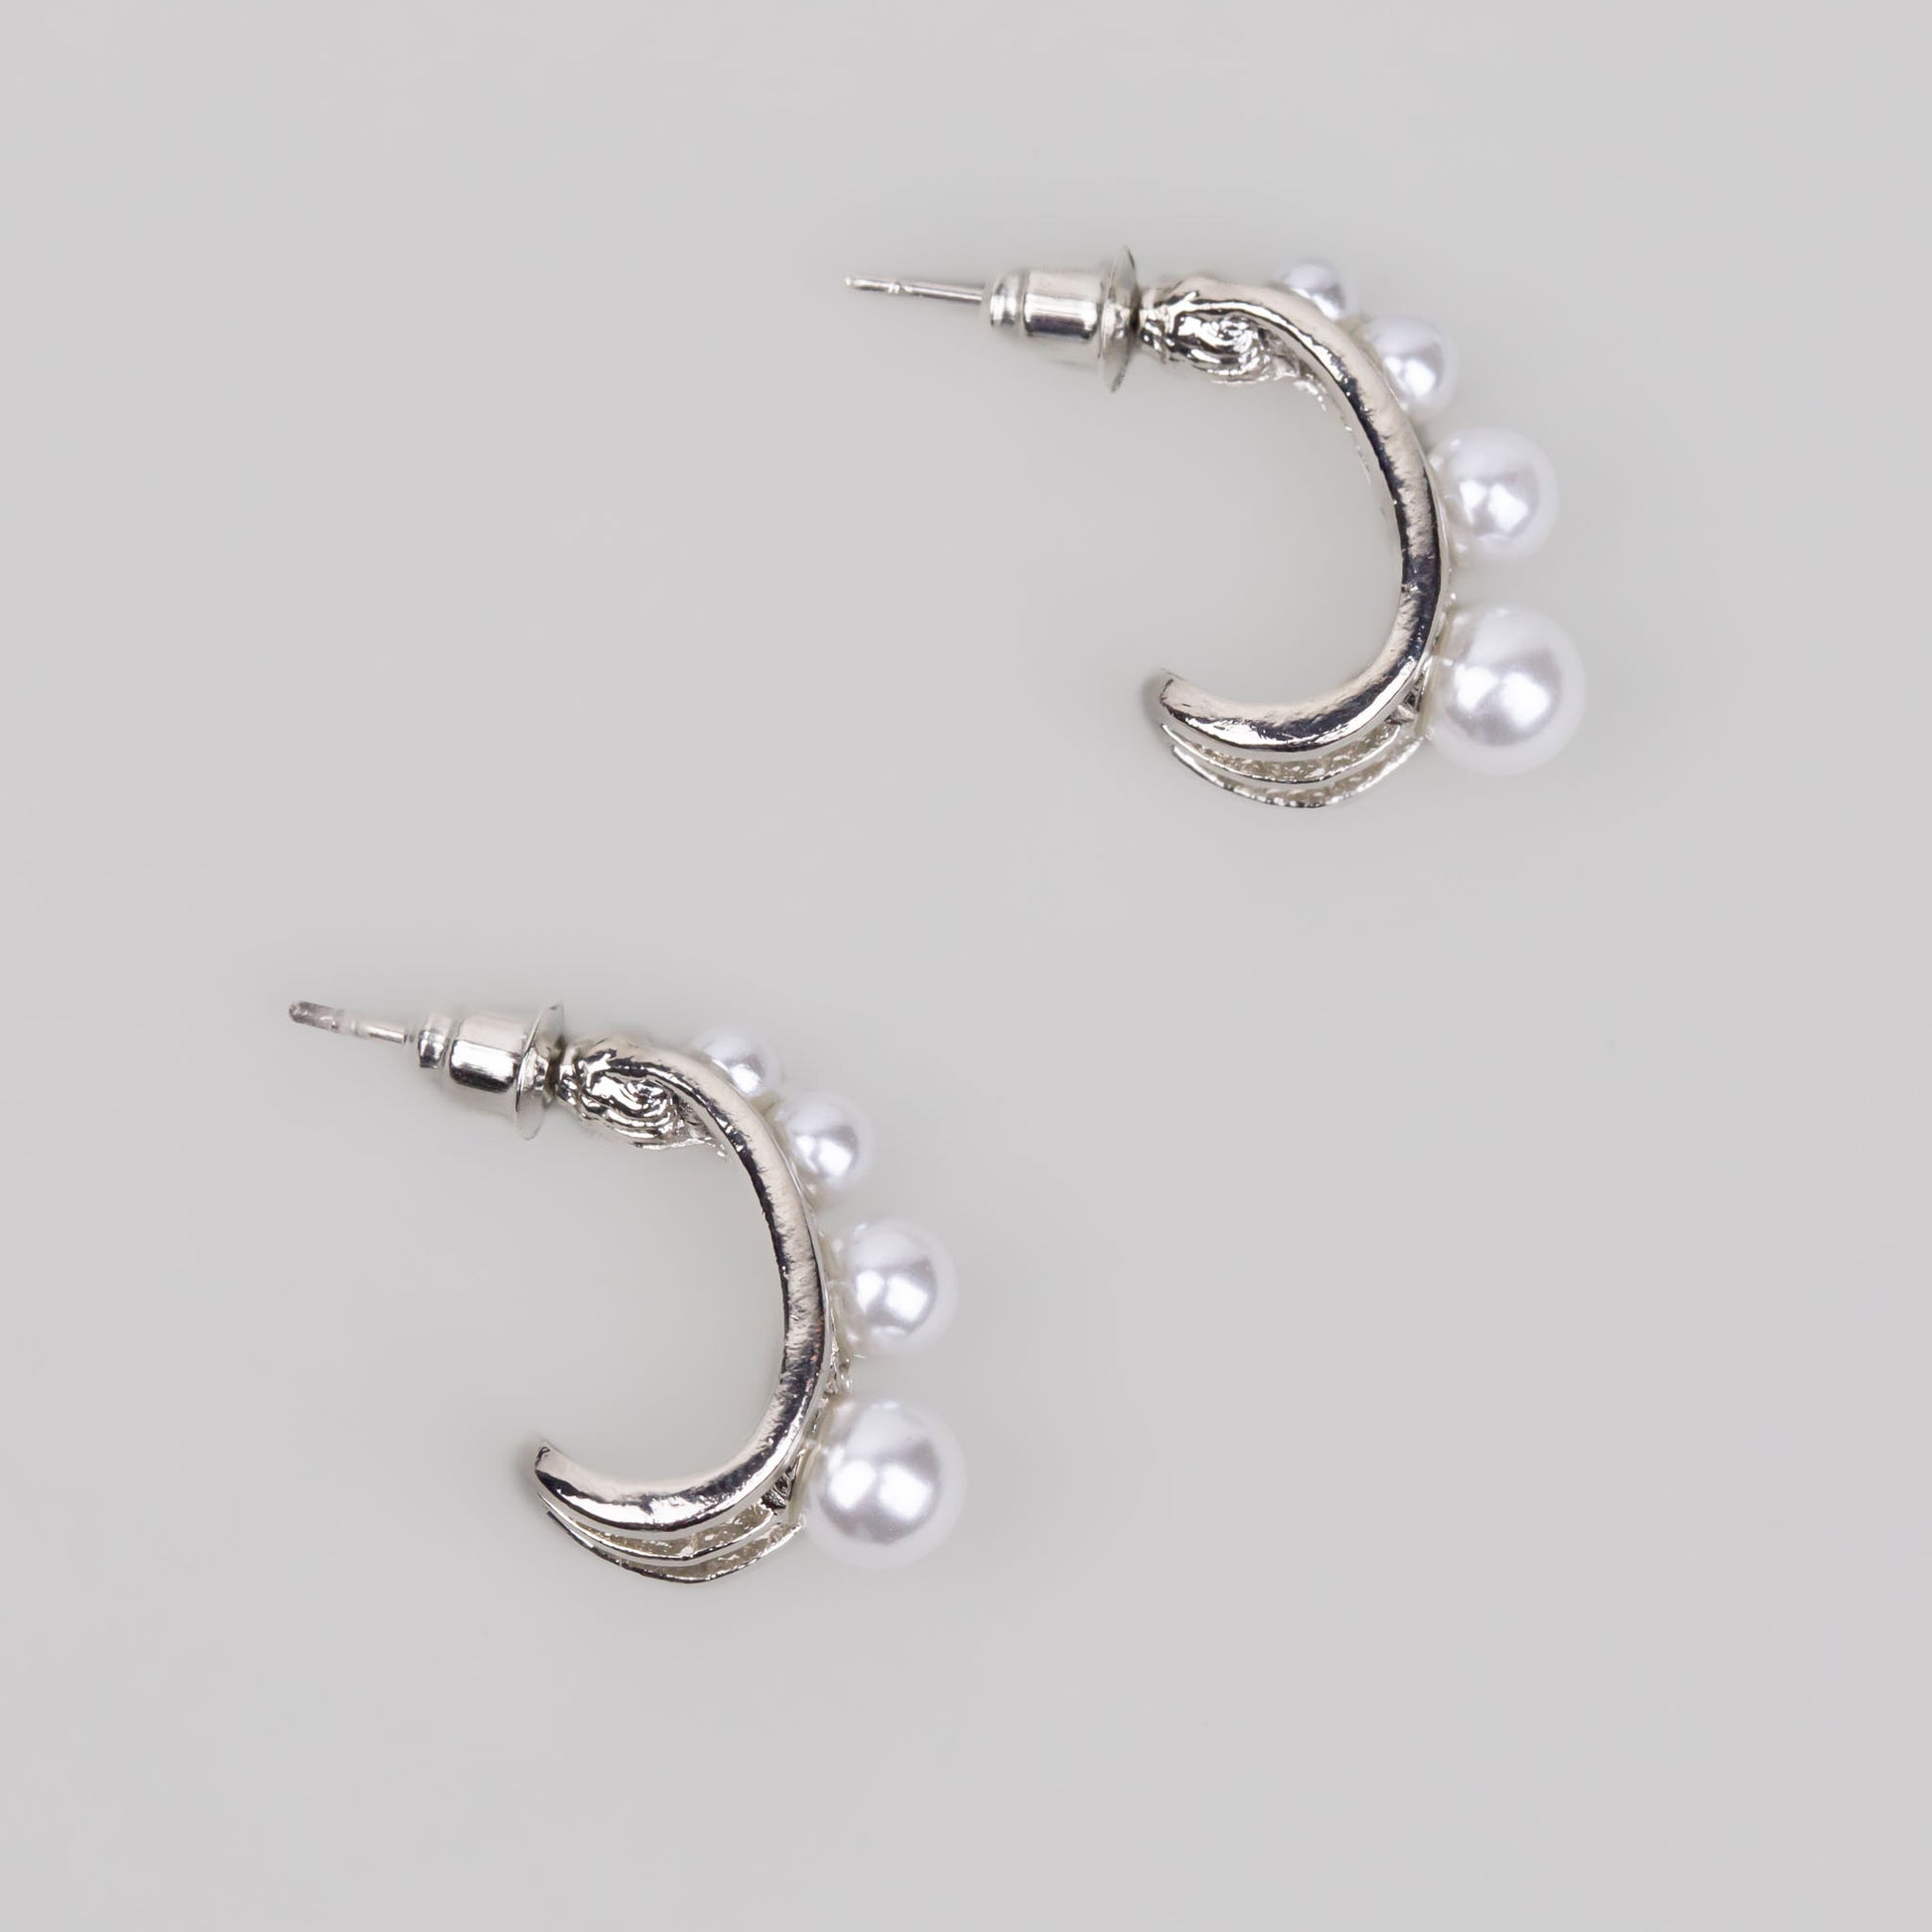 Cercei argintii semirotunzi cu perle mici